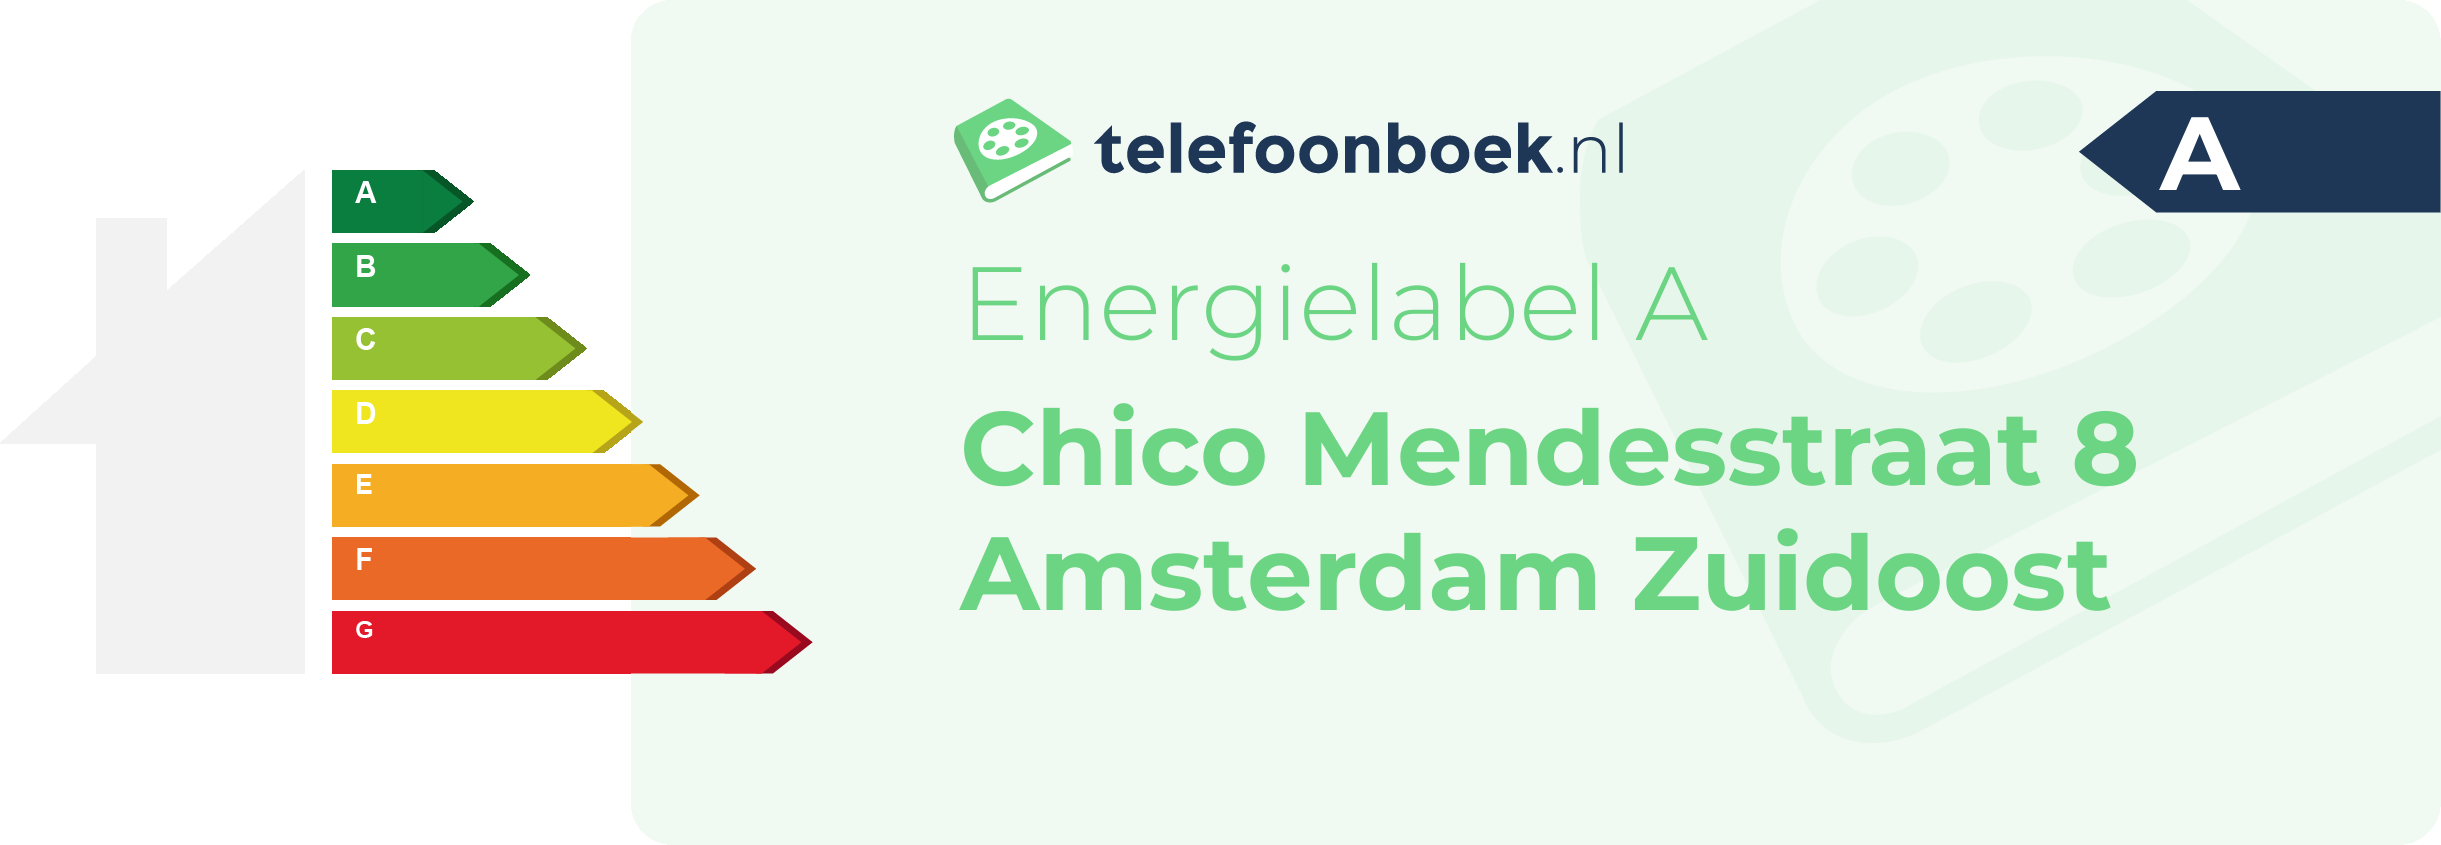 Energielabel Chico Mendesstraat 8 Amsterdam Zuidoost